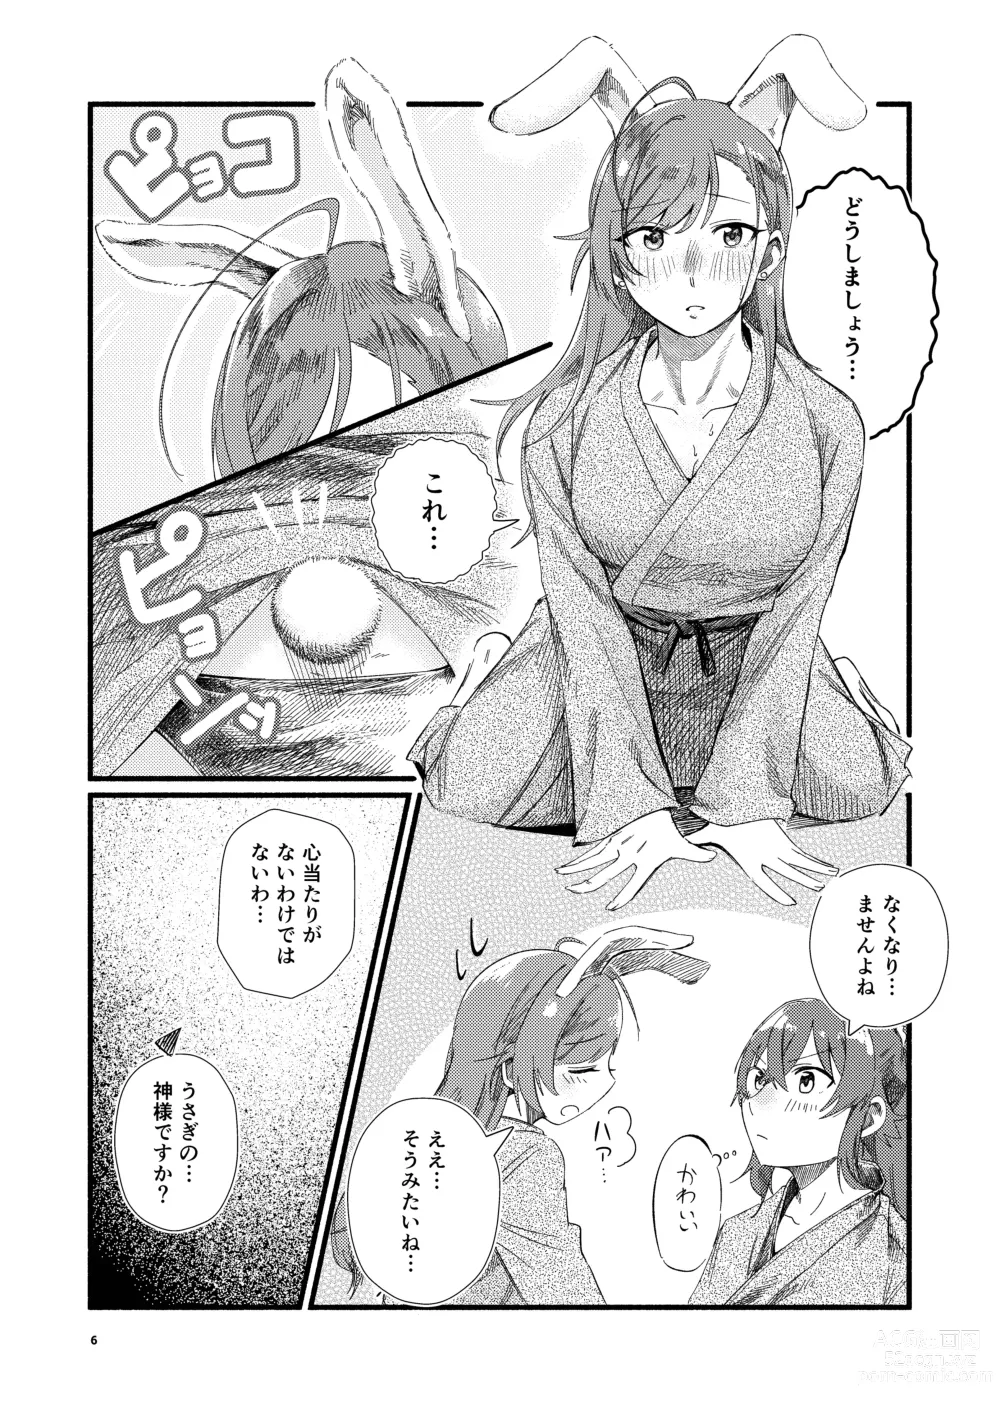 Page 6 of doujinshi Usagi no Ongaeshi